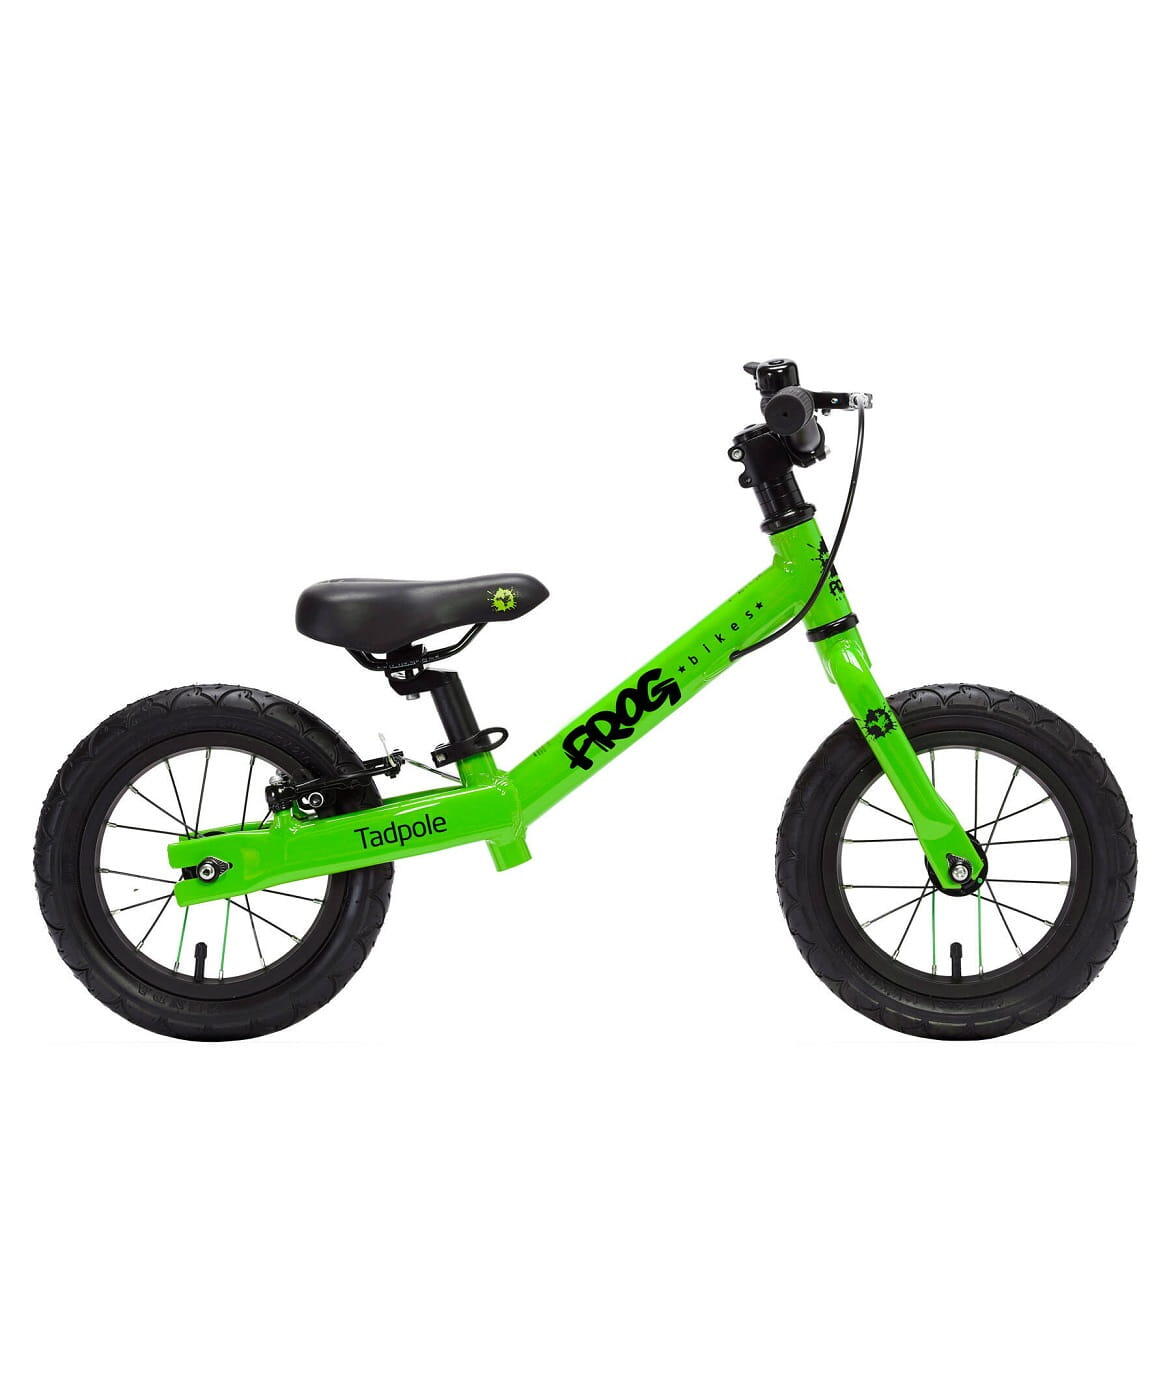 Tadpole 12 Inch Lightweight Kids Balance Bike For 2-3 Years - Green 1/6